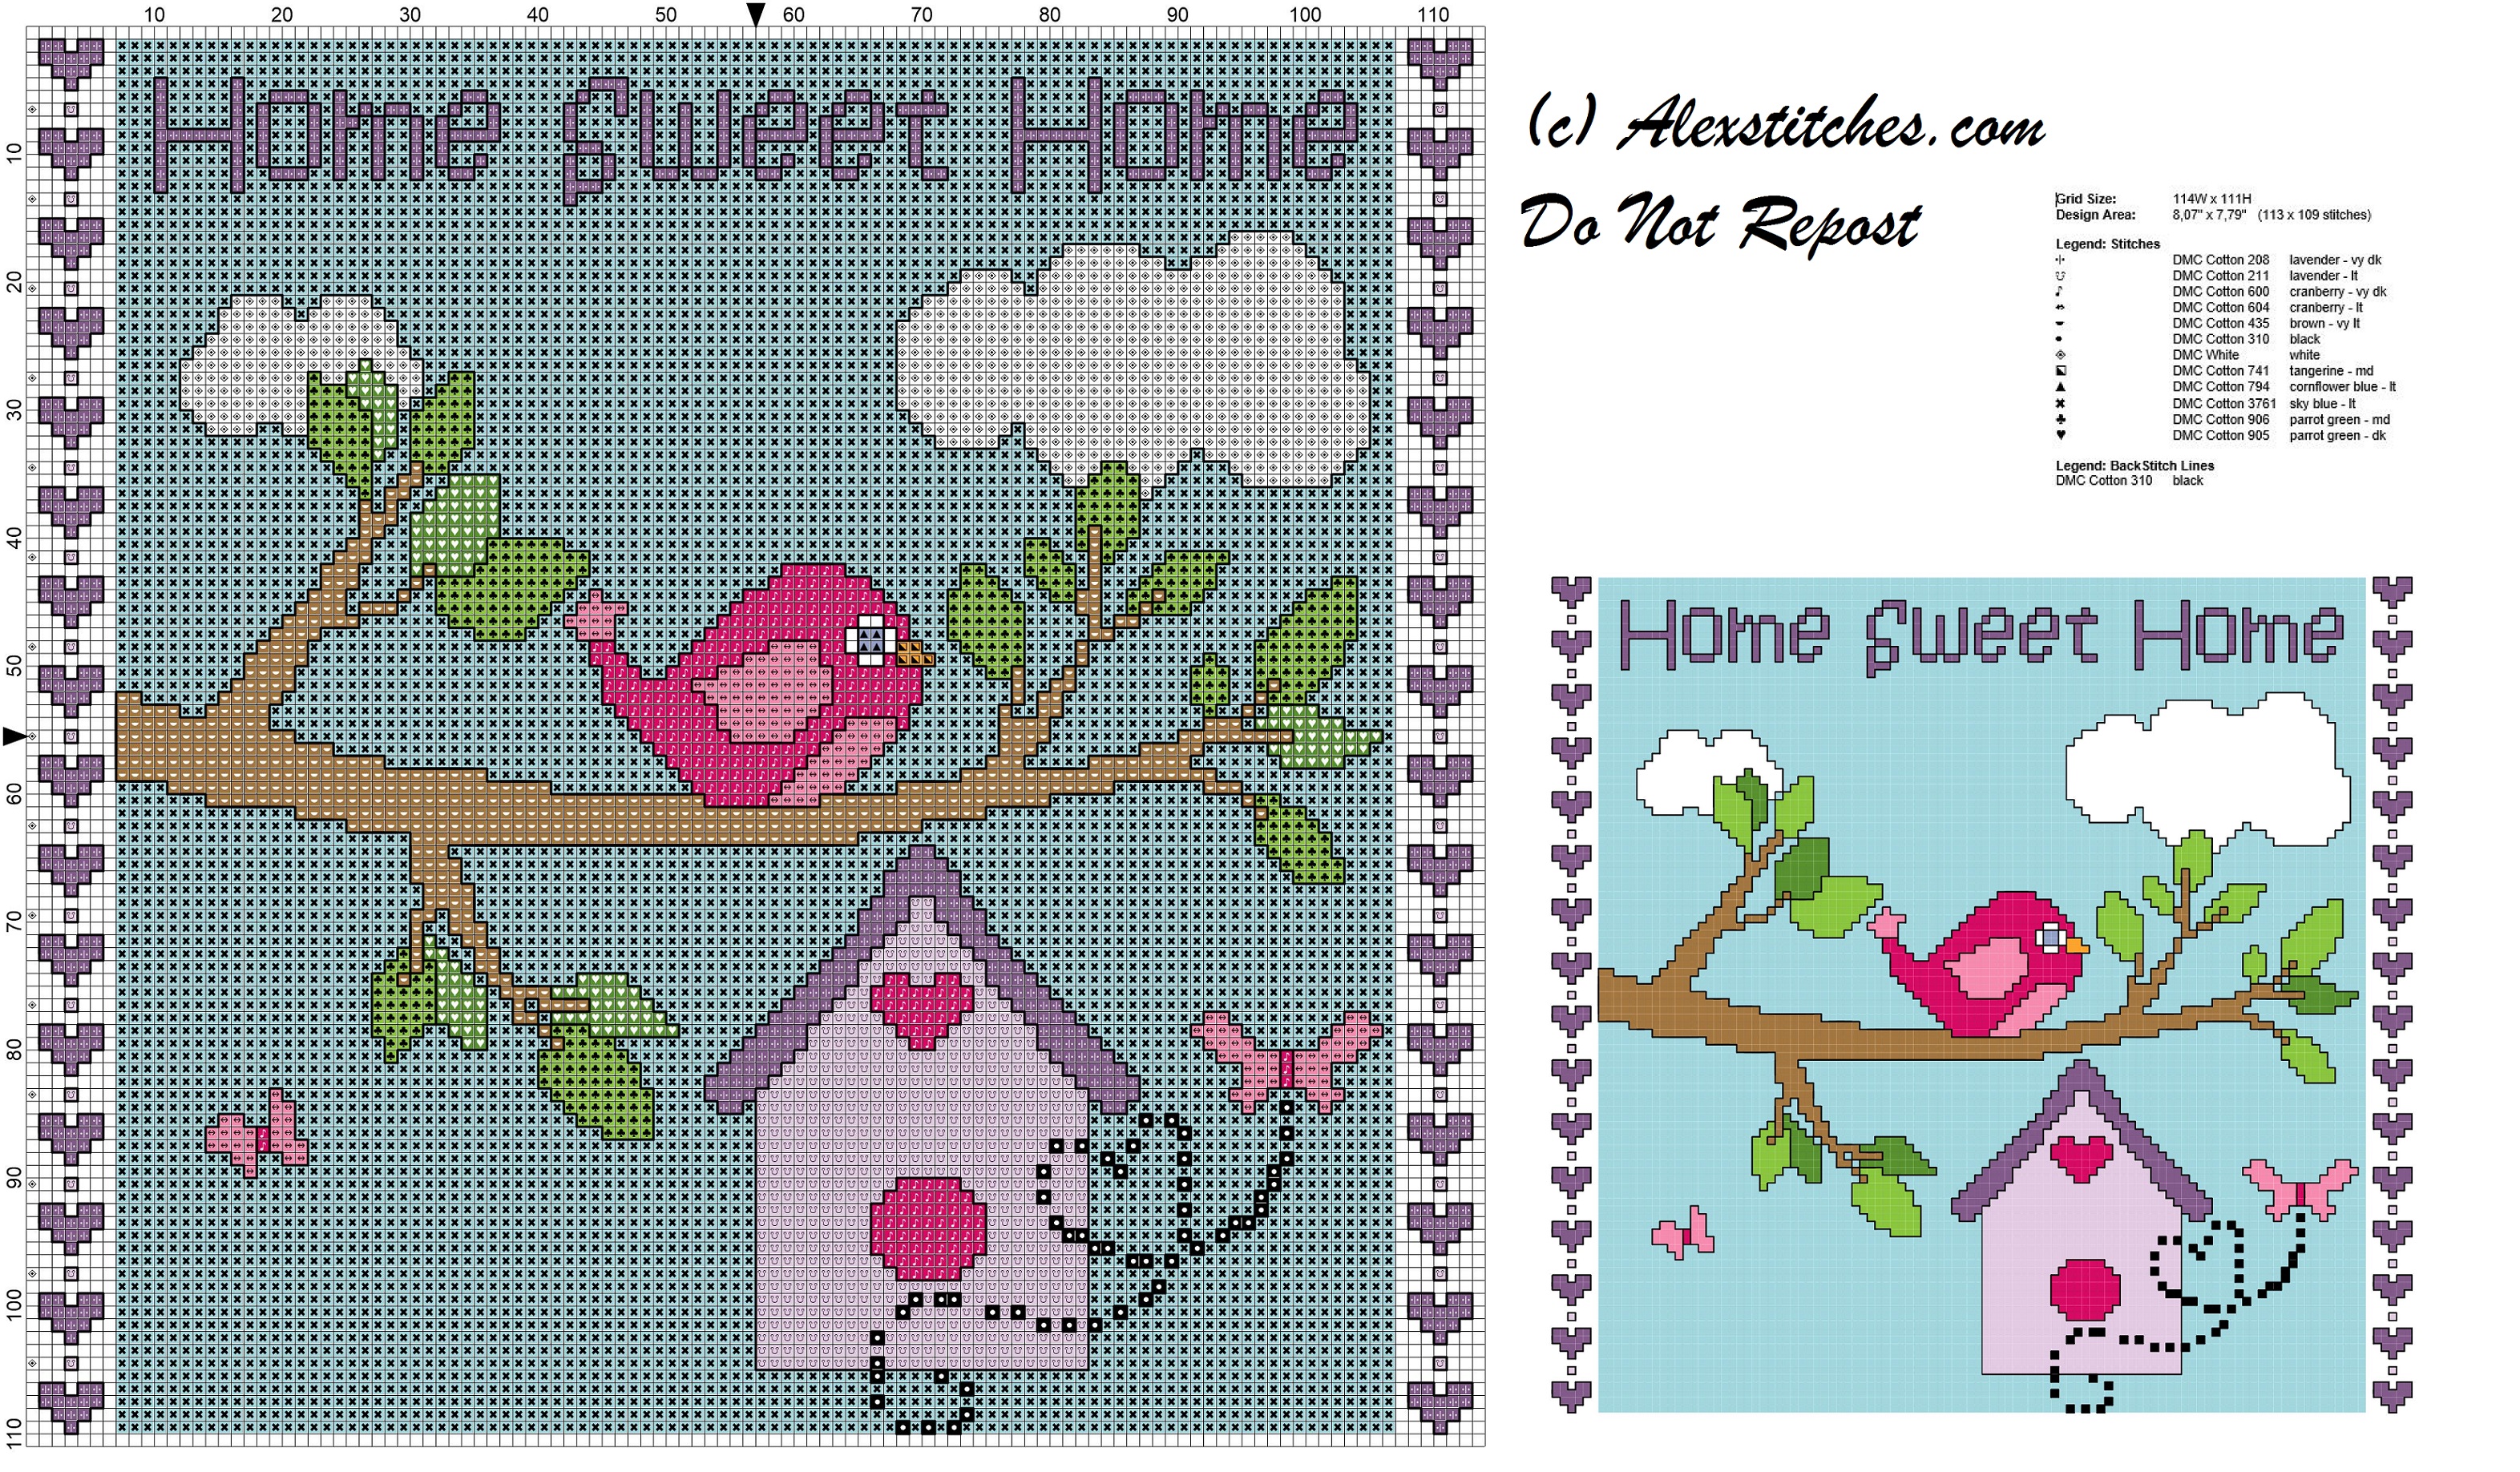 home sweet home free cross stitch pattern